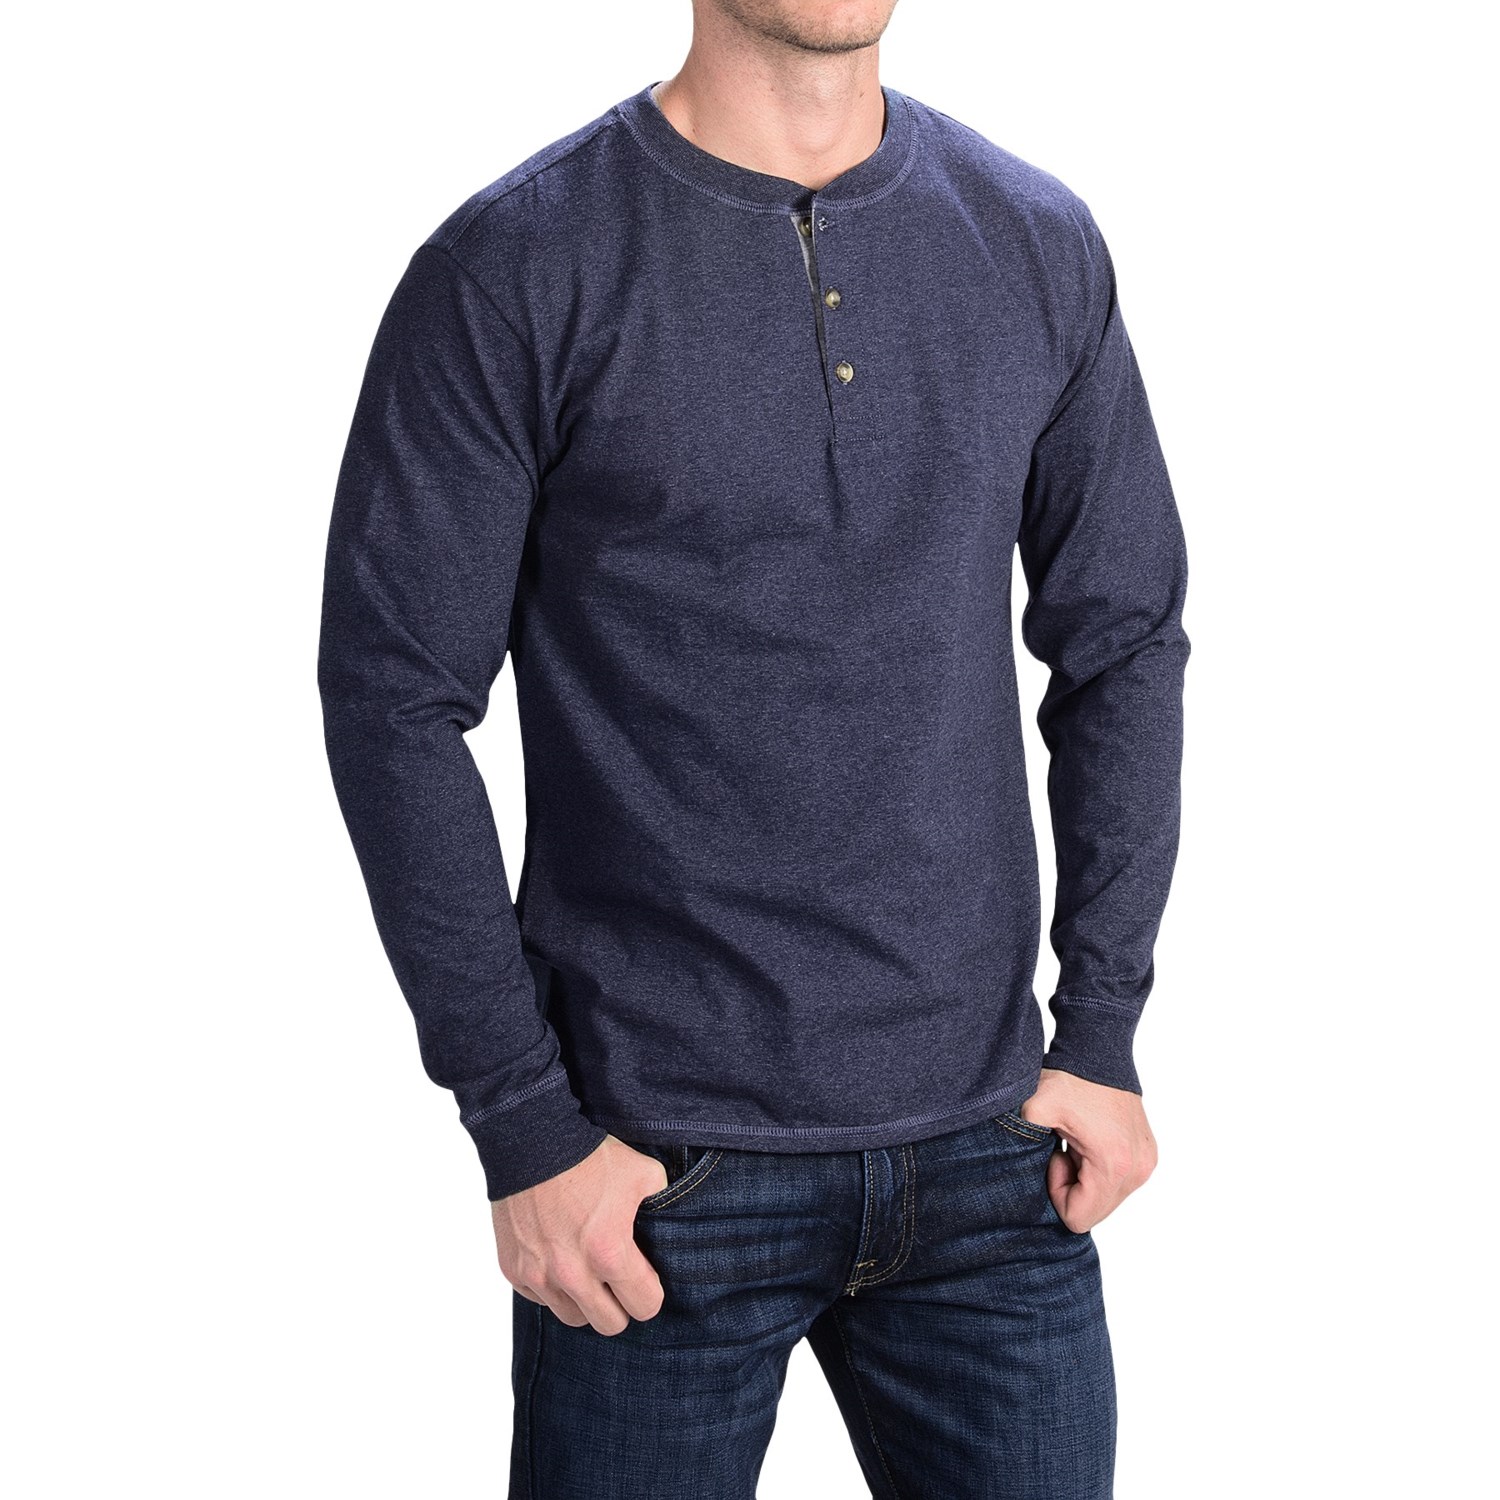 Hanes Henley T-Shirt (For Men) - Save 58%